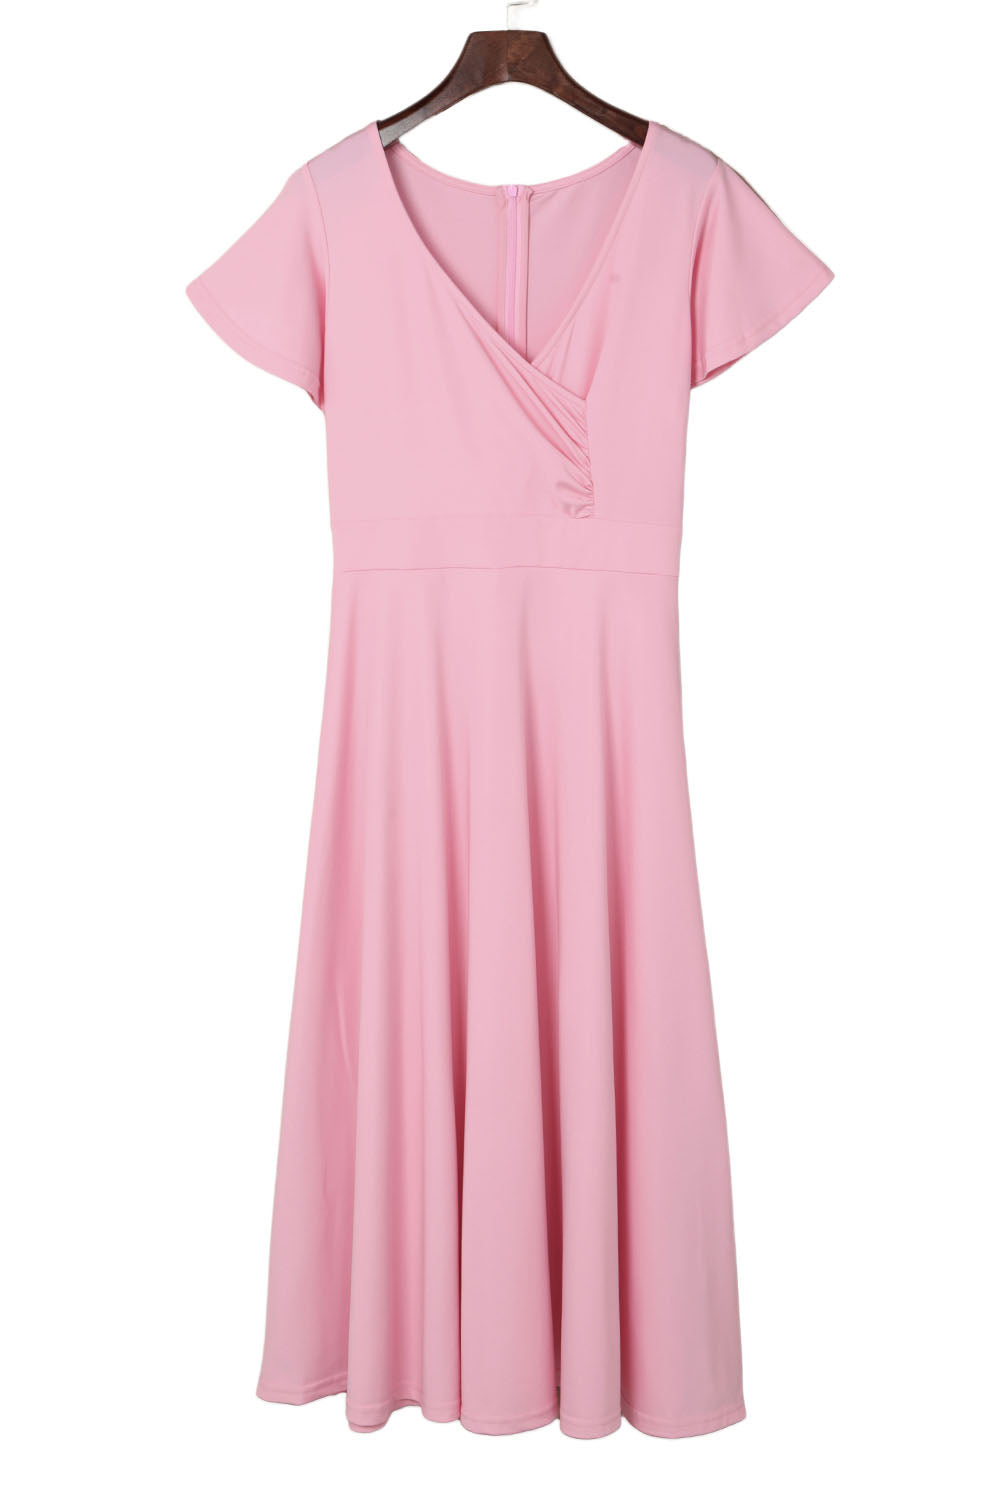 LC6110363-10-S, LC6110363-10-M, LC6110363-10-L, LC6110363-10-XL, LC6110363-10-2XL, Pink Womens V Neck Ruffle Sleeve Wrap Dress Midi Dress Cocktail Party Dress